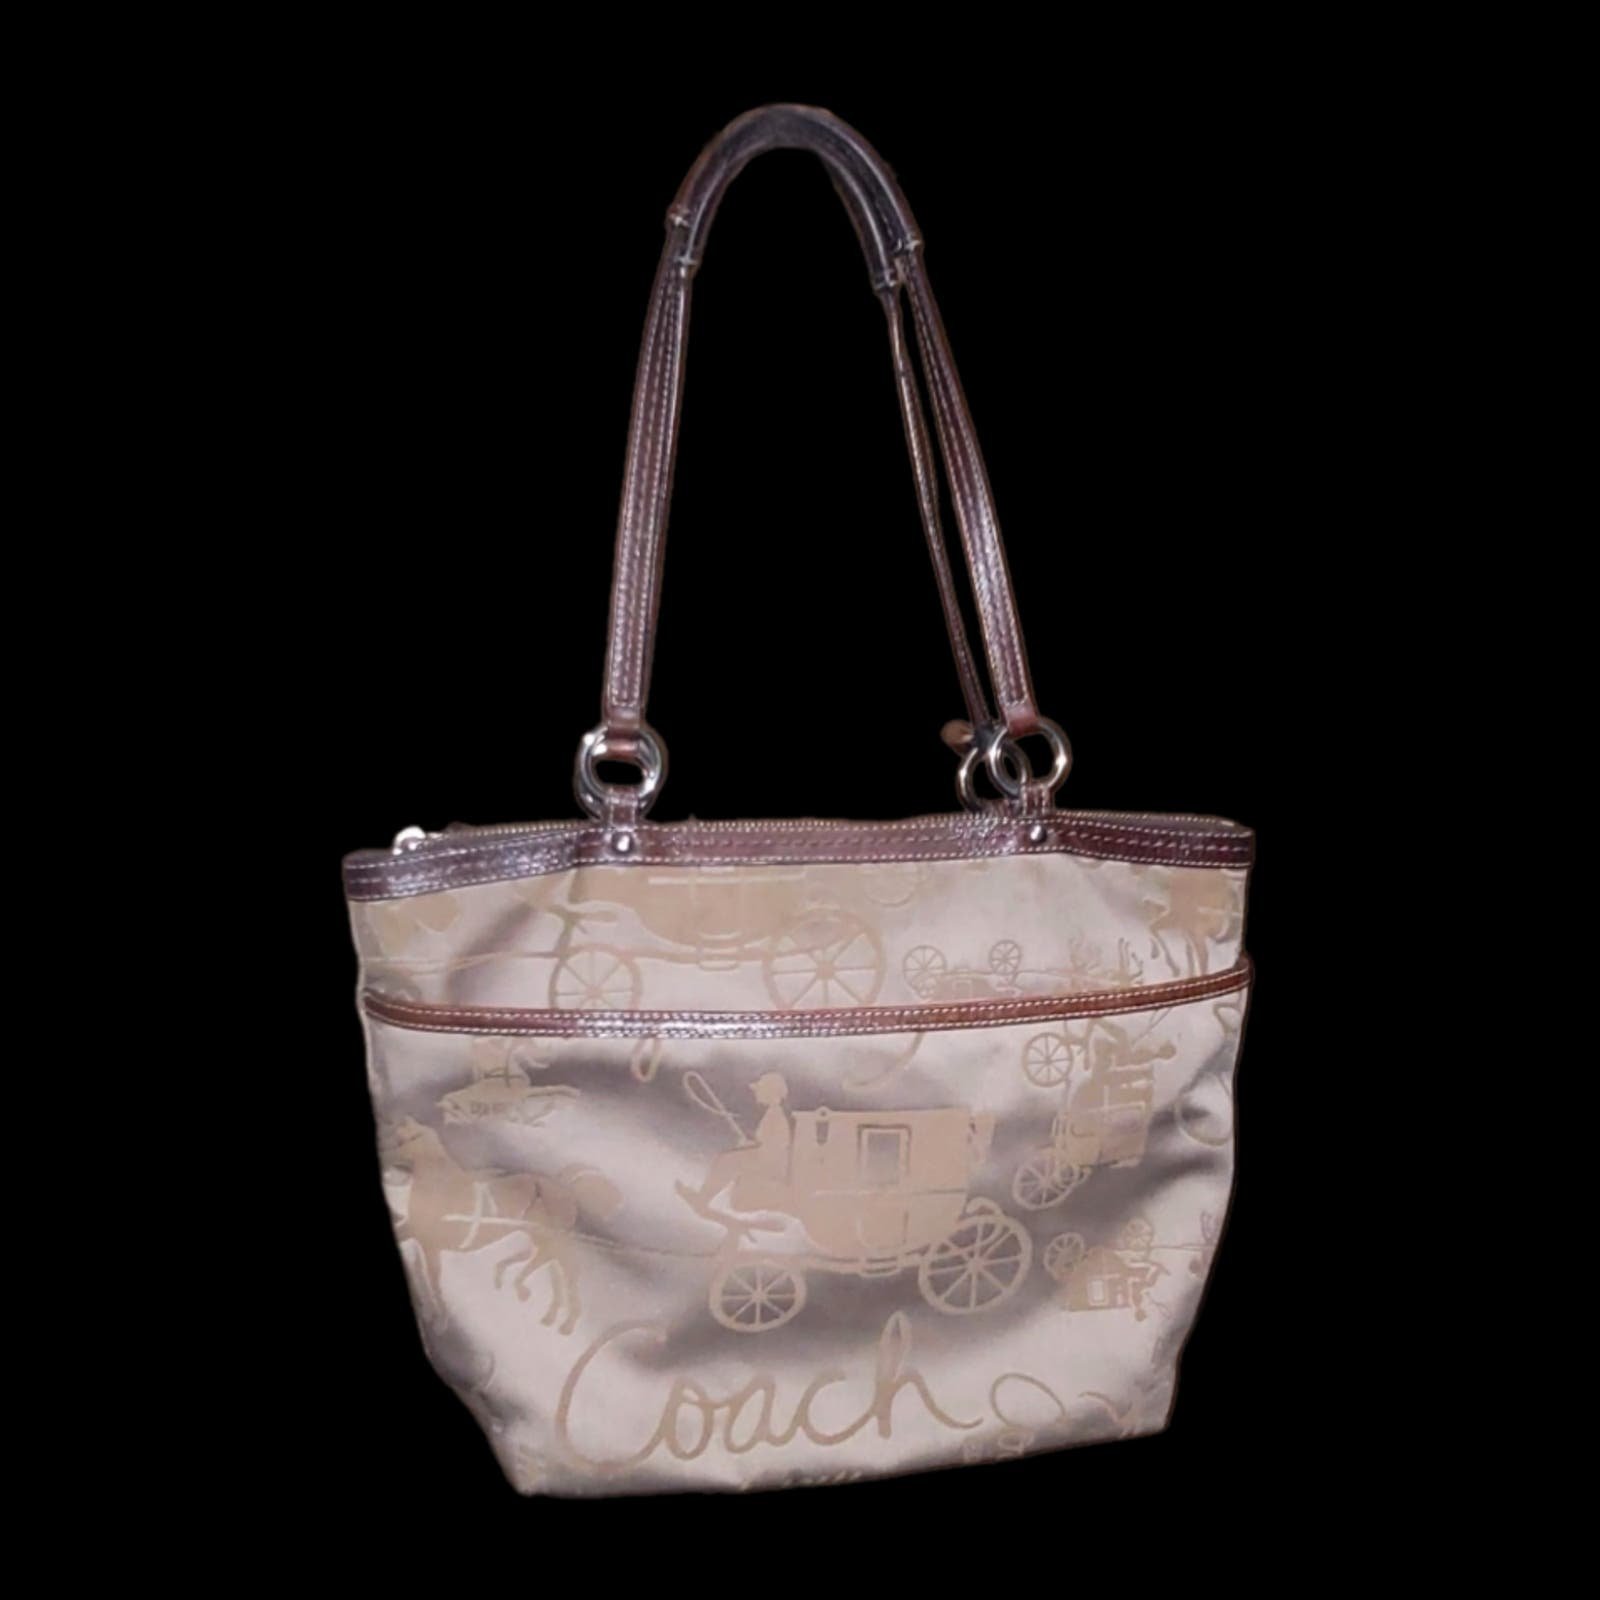 Tan Silky Designer Handbag Purse bQhDcbg50